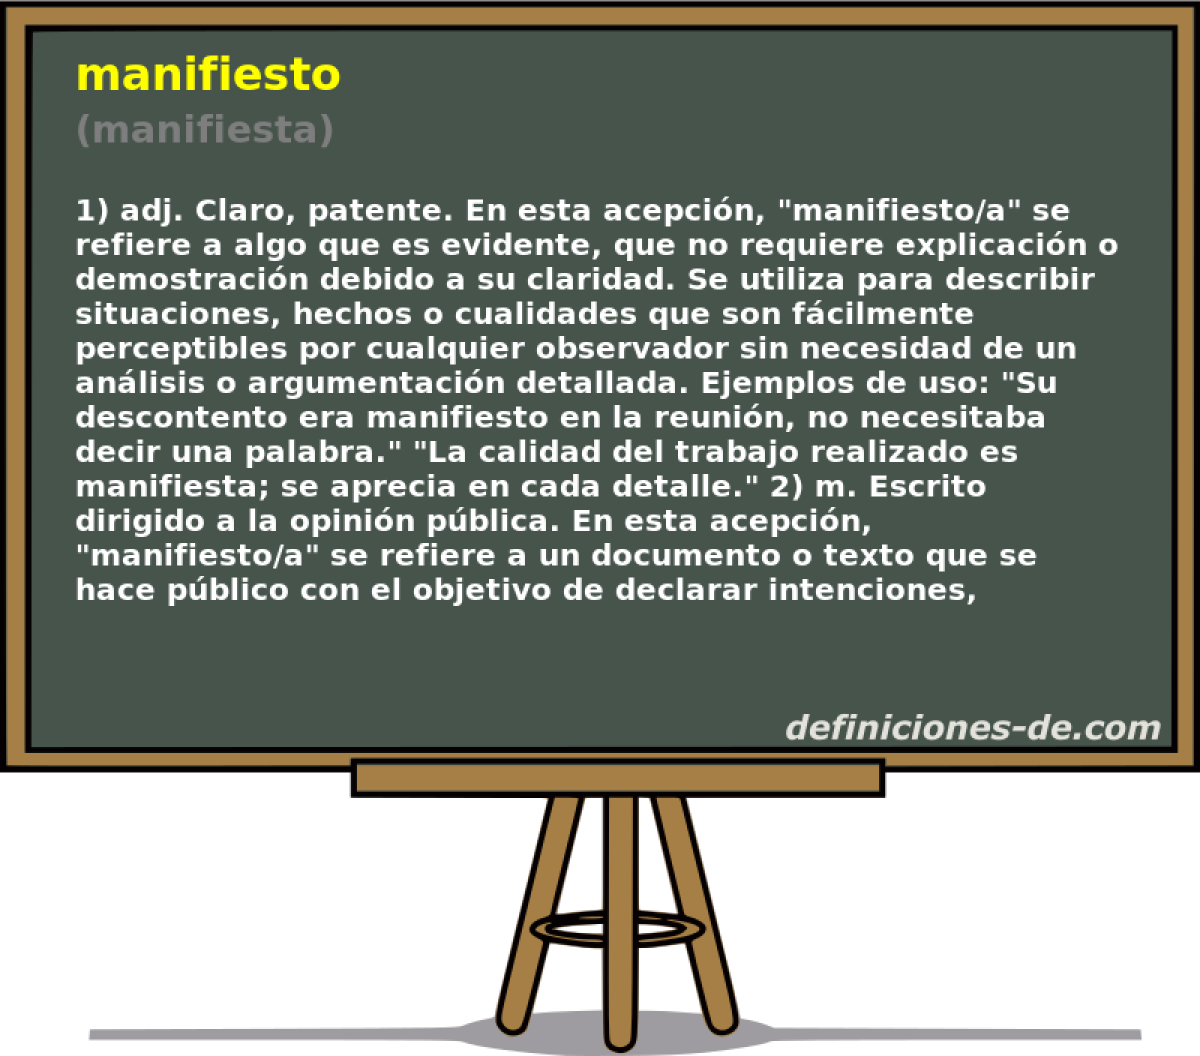 manifiesto (manifiesta)